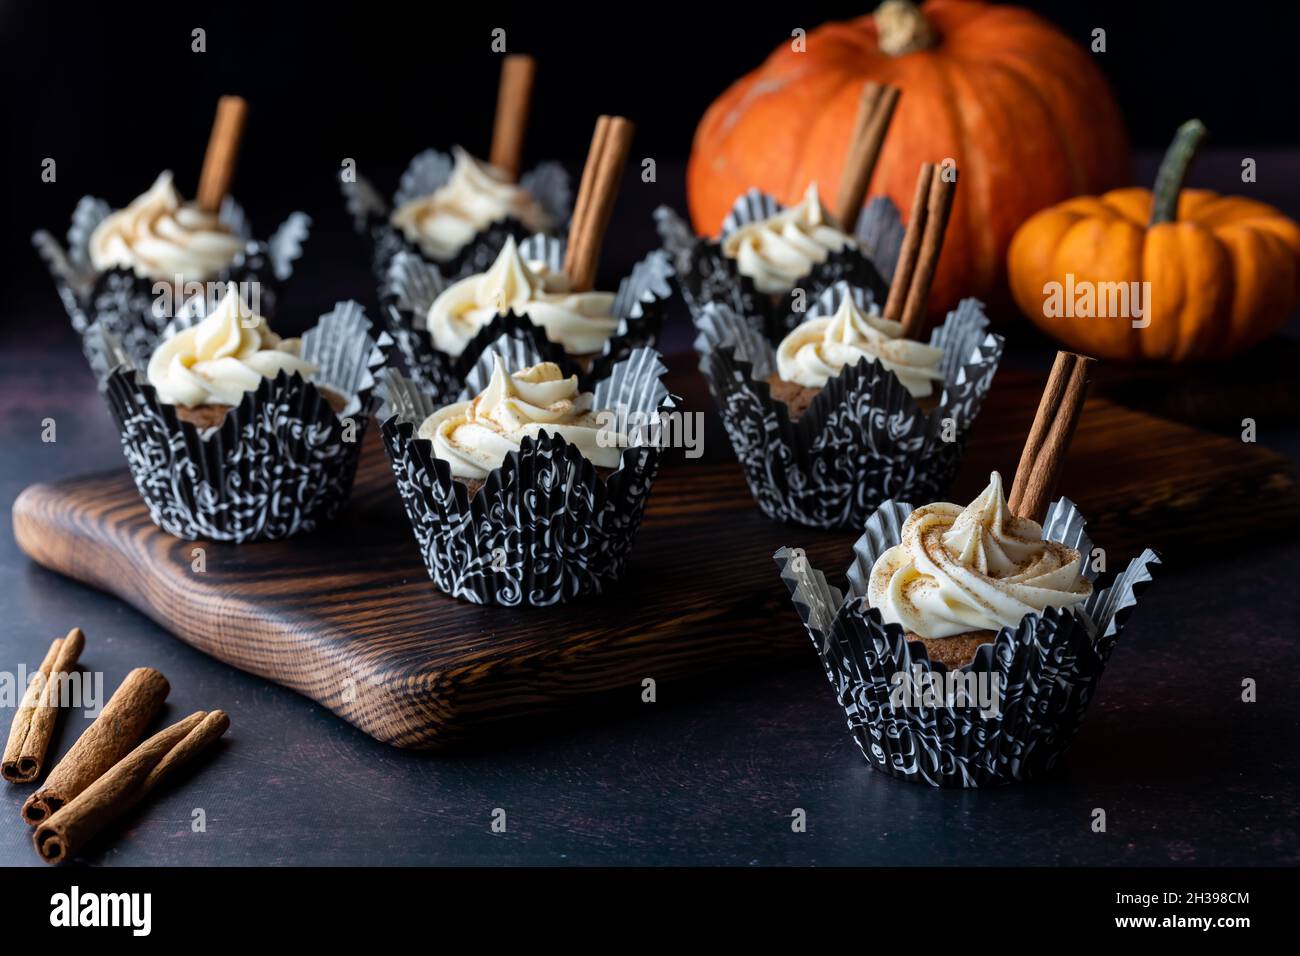 Pumpkin spice cupcakes and cinnamon sticks for garnish against a dark background Stock Photo